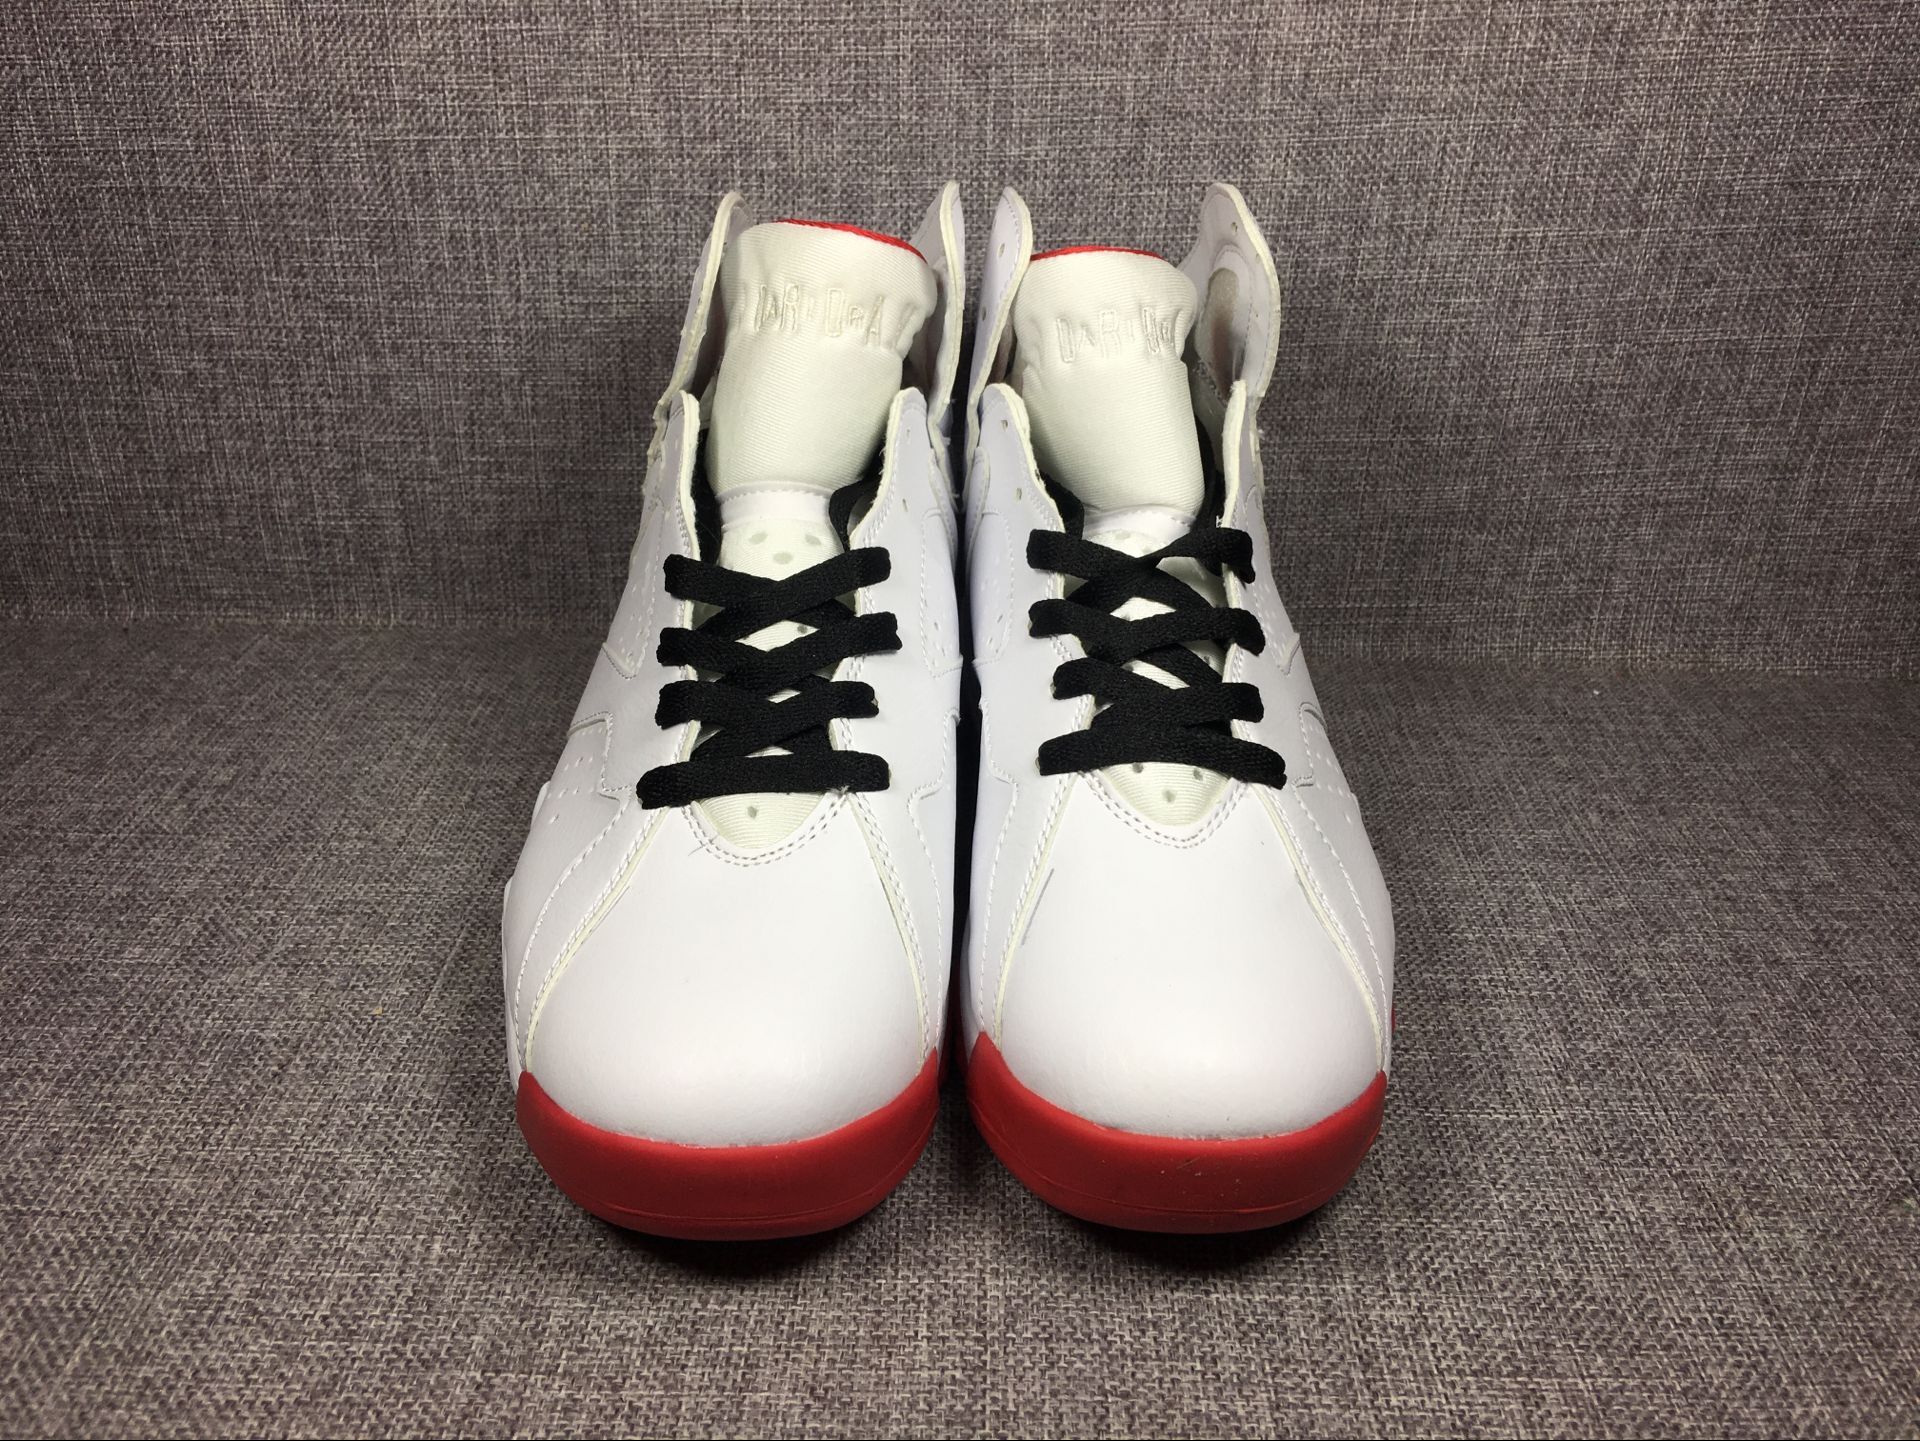 New Air Jordan 7 Retro White Red Shoes